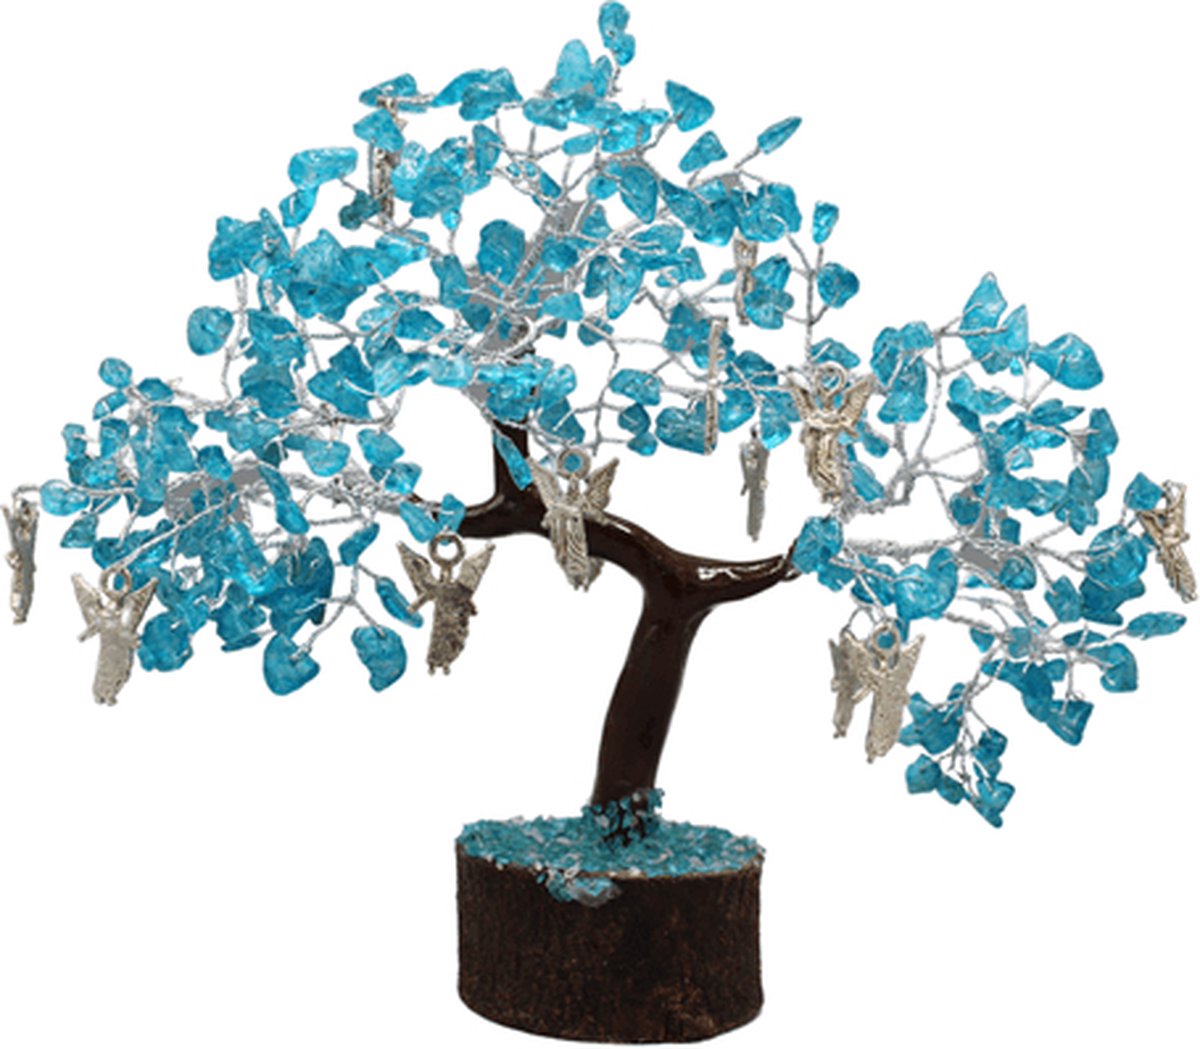 Edelstenenboompje Blauwe Topaas – Begeleiding – Groot